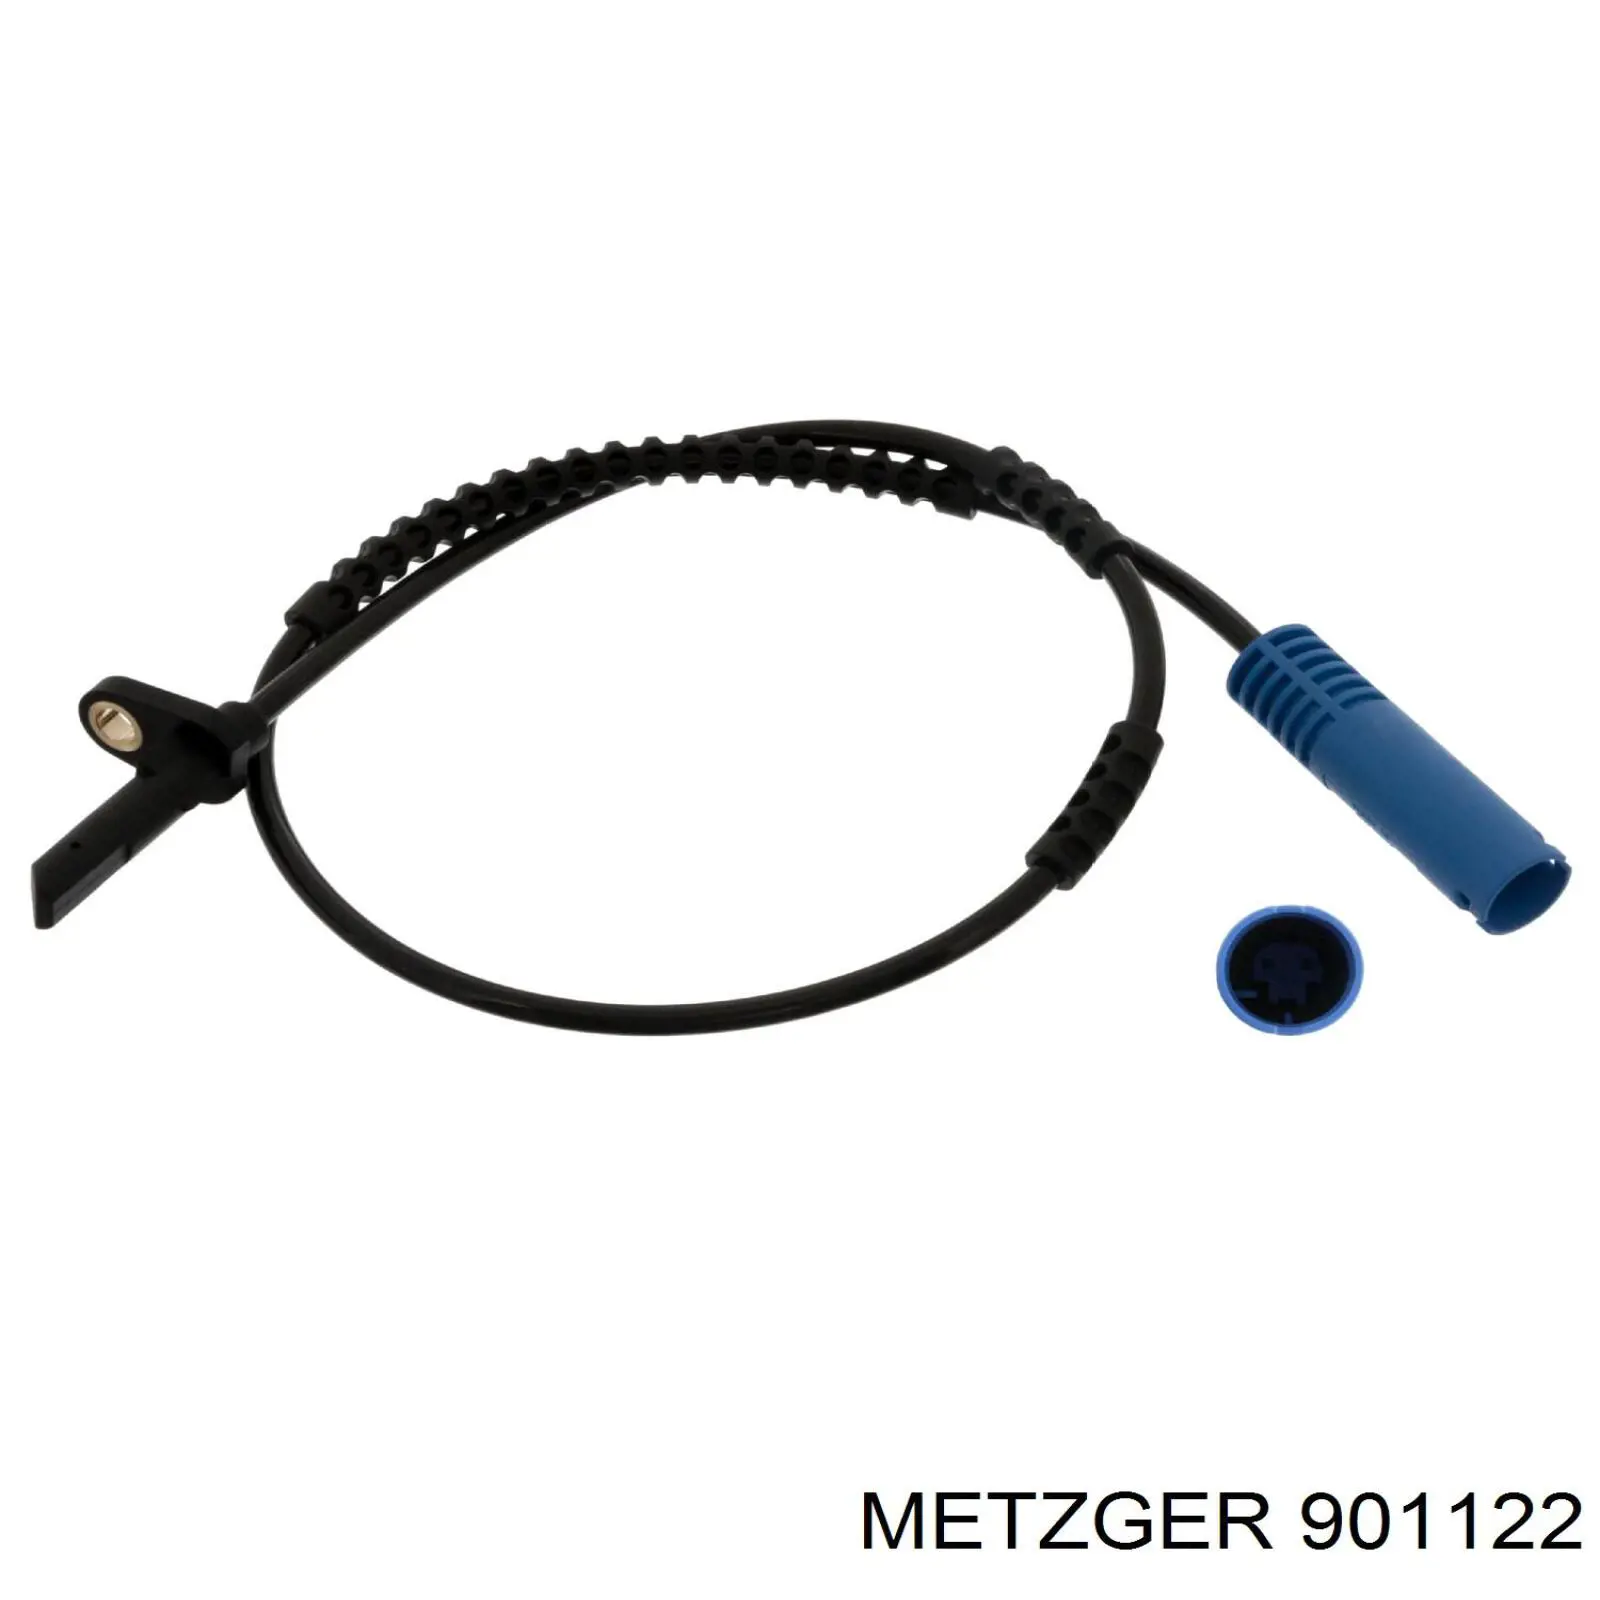 901122 Metzger датчик сигнализации парковки (парктроник передний)